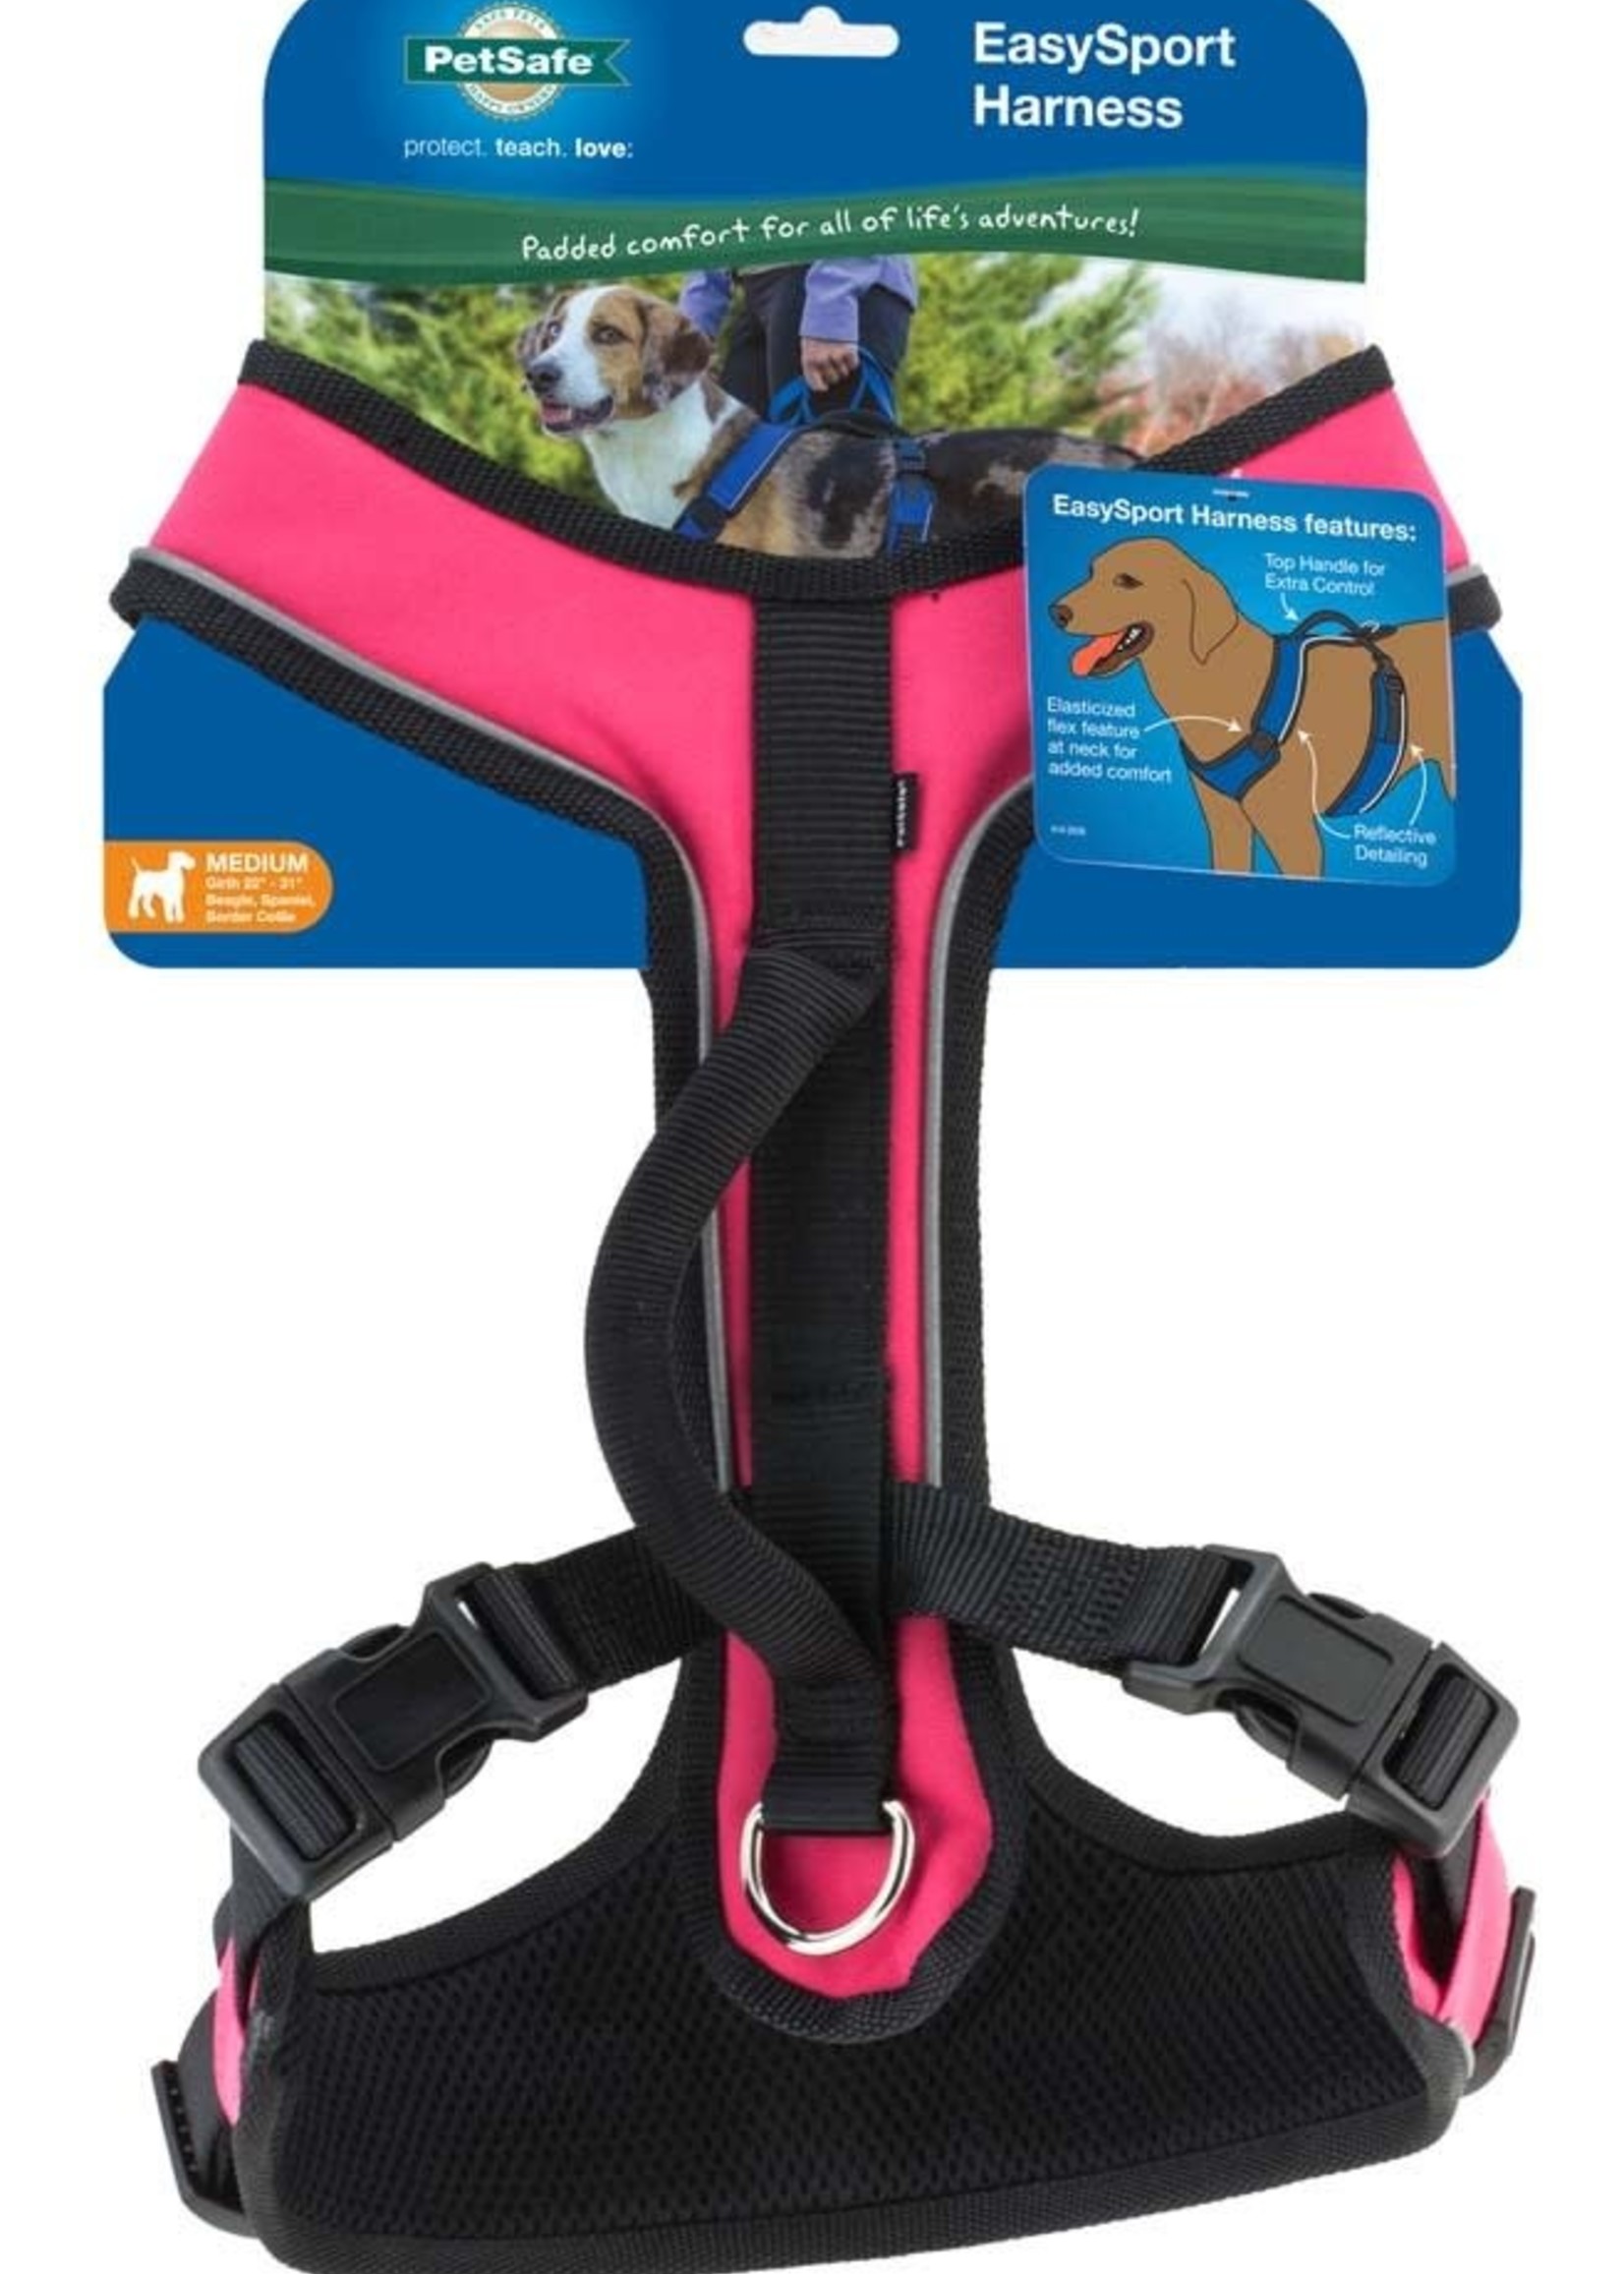 PetSafe Pet Safe Easysport Harness Pink Medium